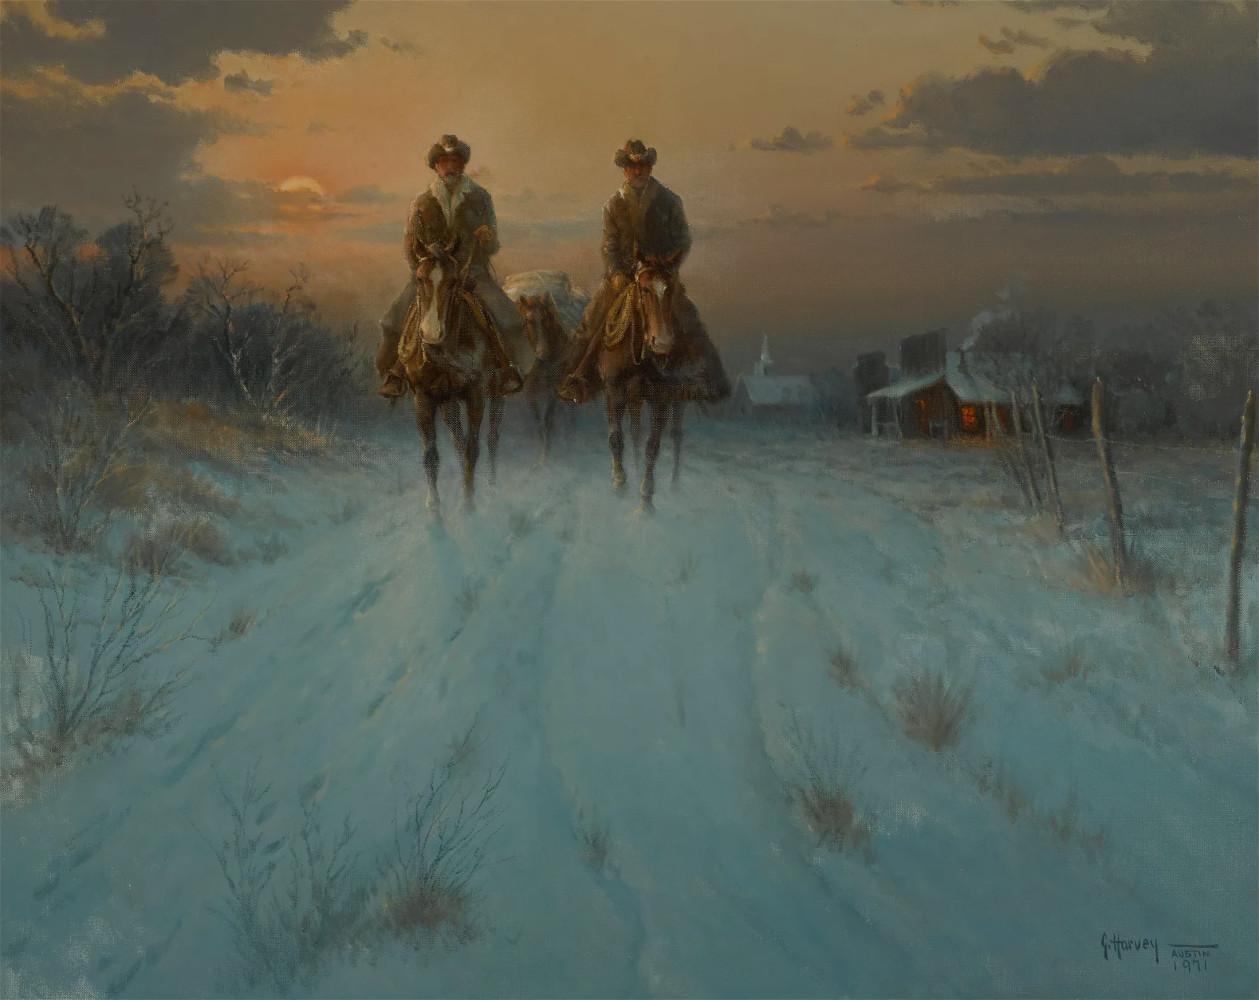 G. Harvey Landscape Painting - "THINKING OF HOME" TEXAS WESTERN LANDSCAPE COWBOYS HORSES SNOW